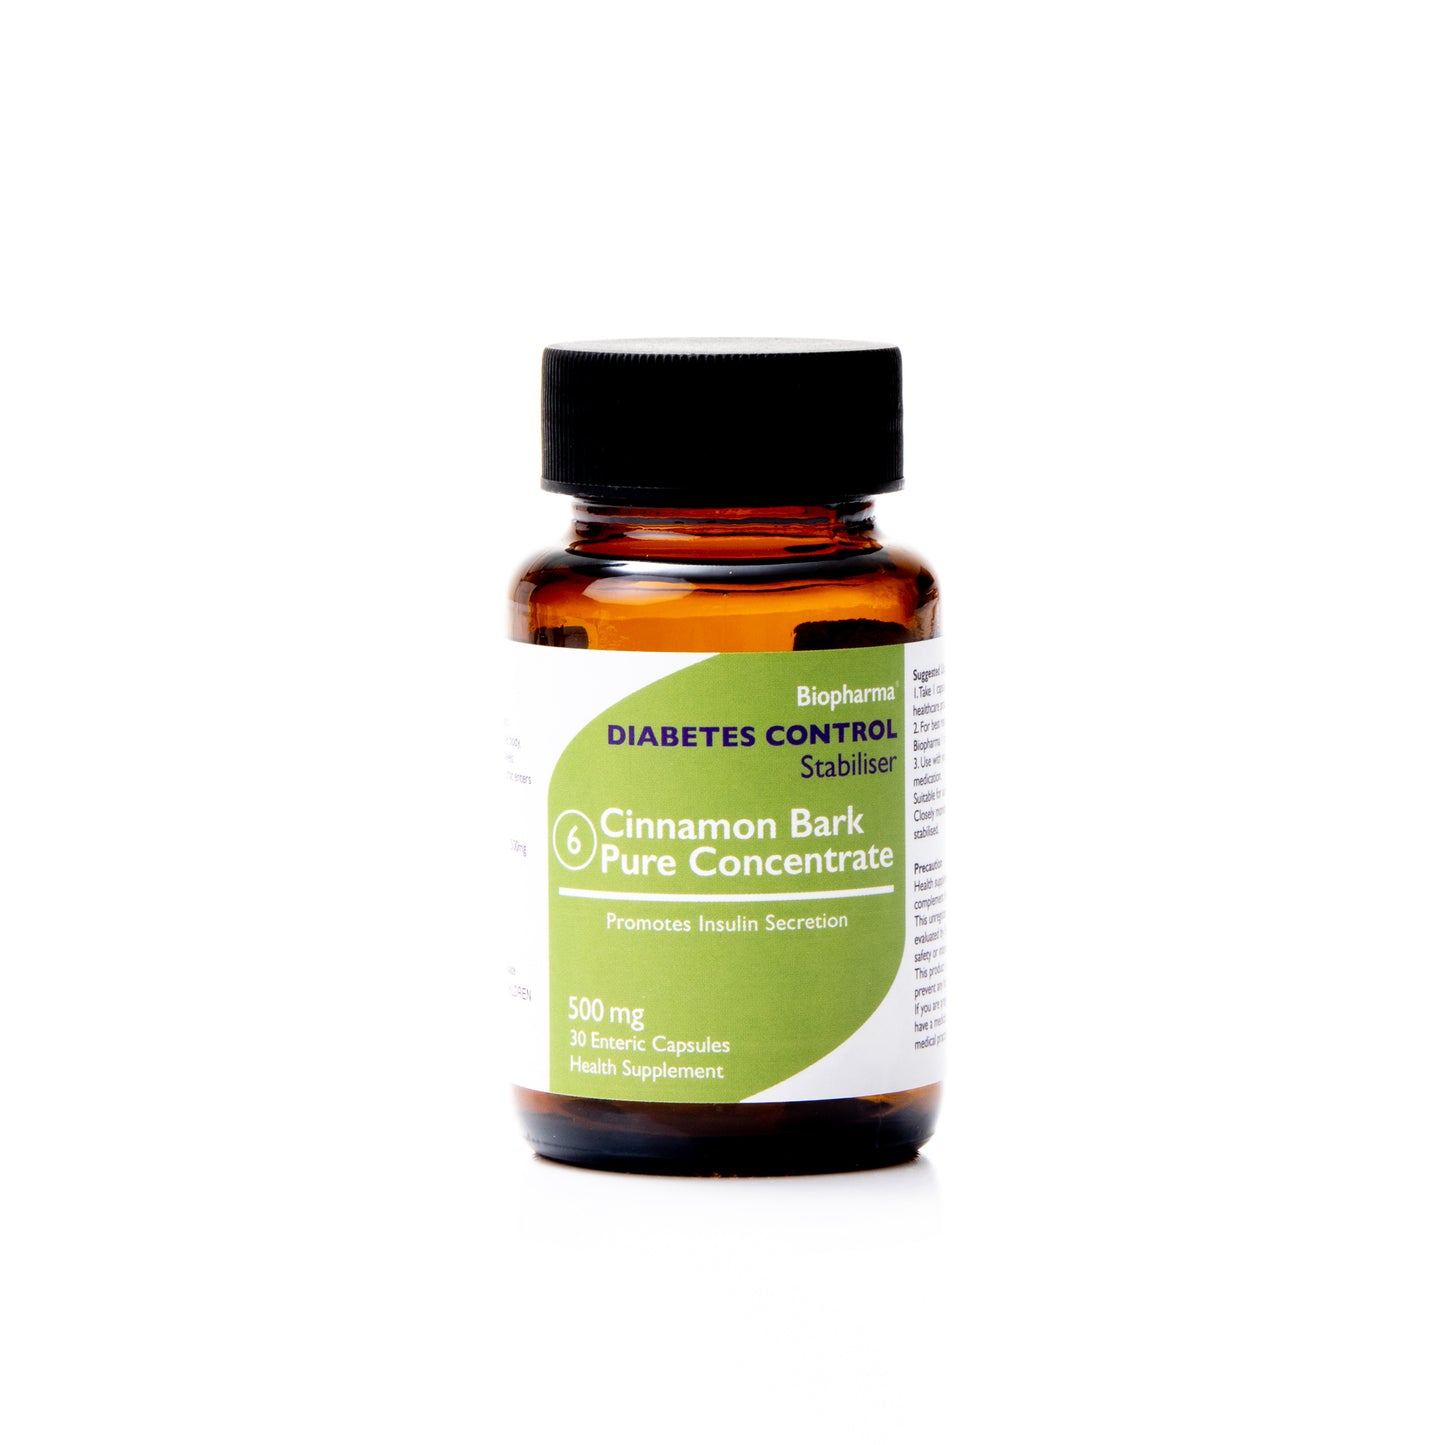 Biopharma Cinnamon Bark Pure Concentrate - Stabiliser 6